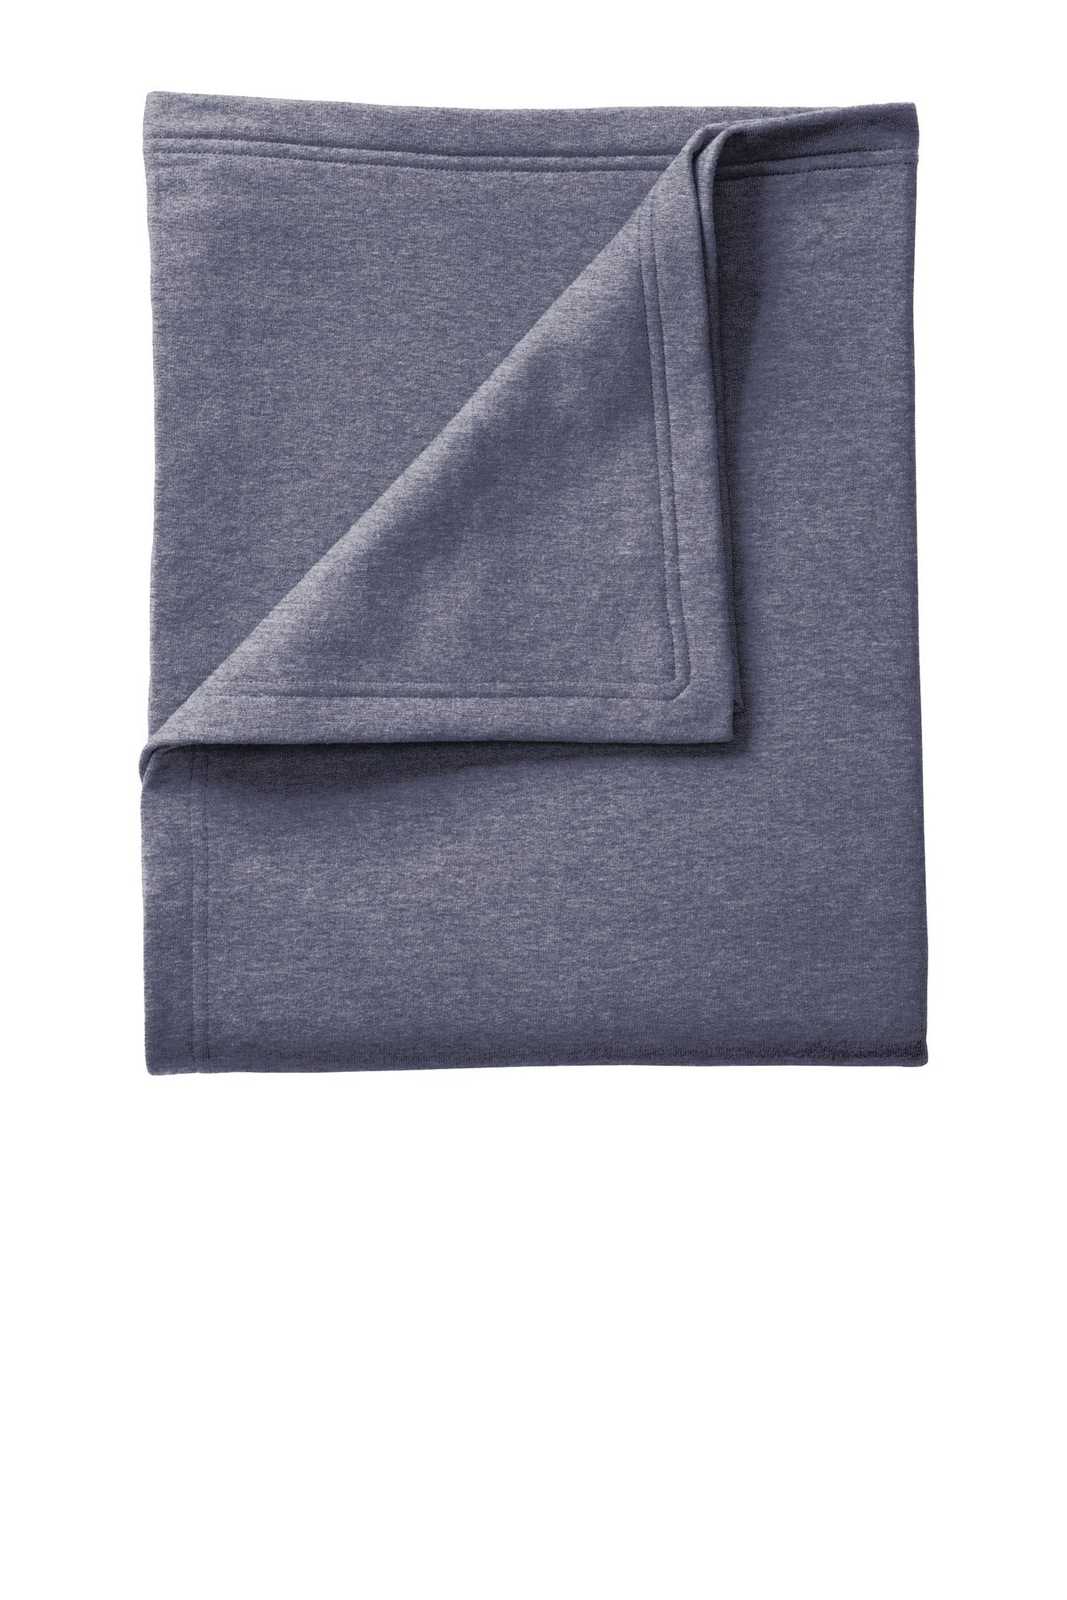 Port &amp; Company BP78 Core Fleece Sweatshirt Blanket - Heather Navy - HIT a Double - 1